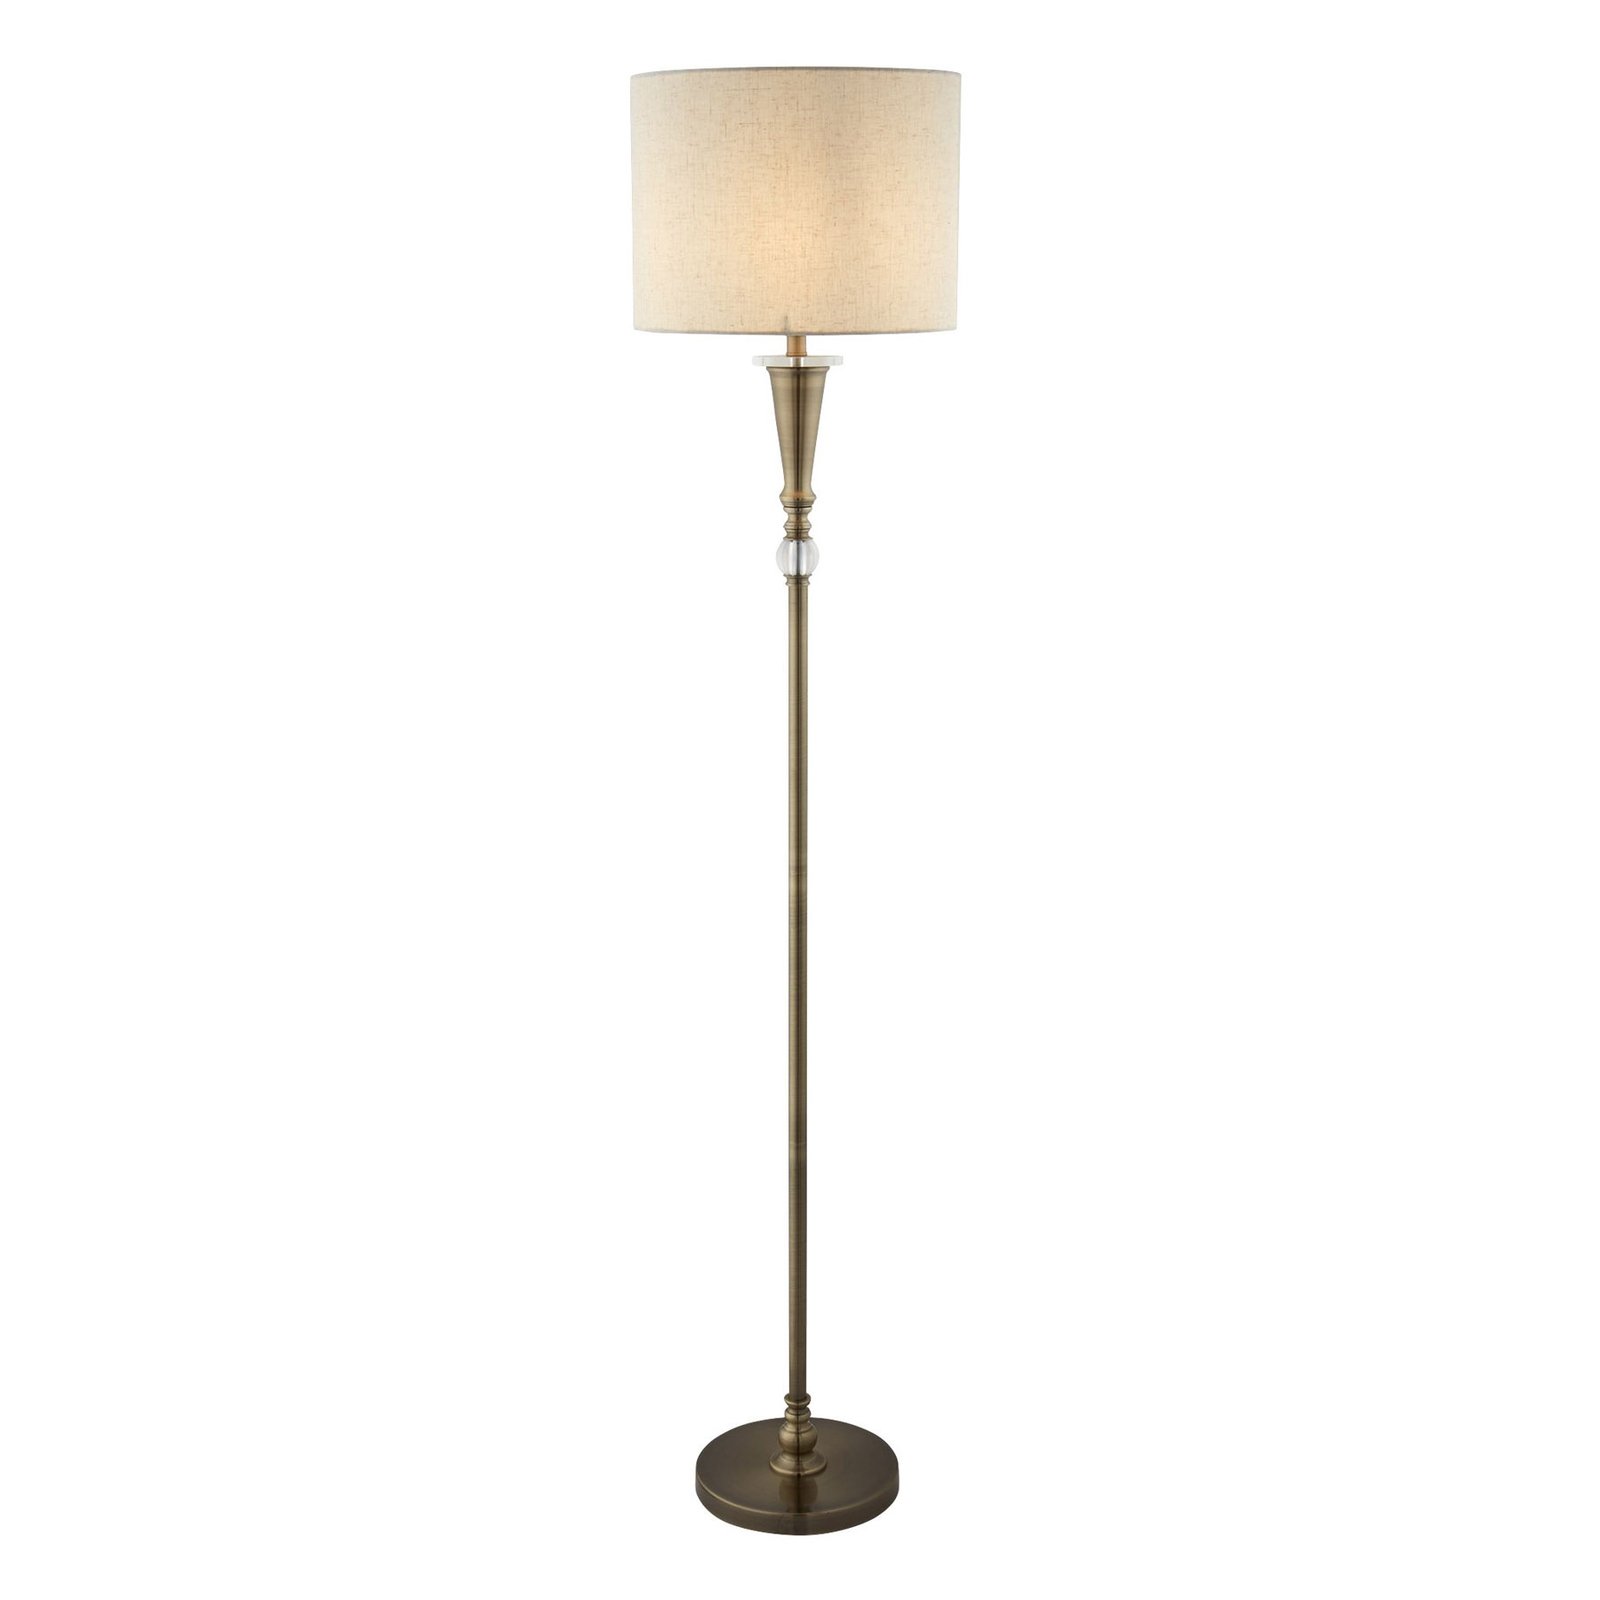 Oscar floor lamp with linen-look lampshade